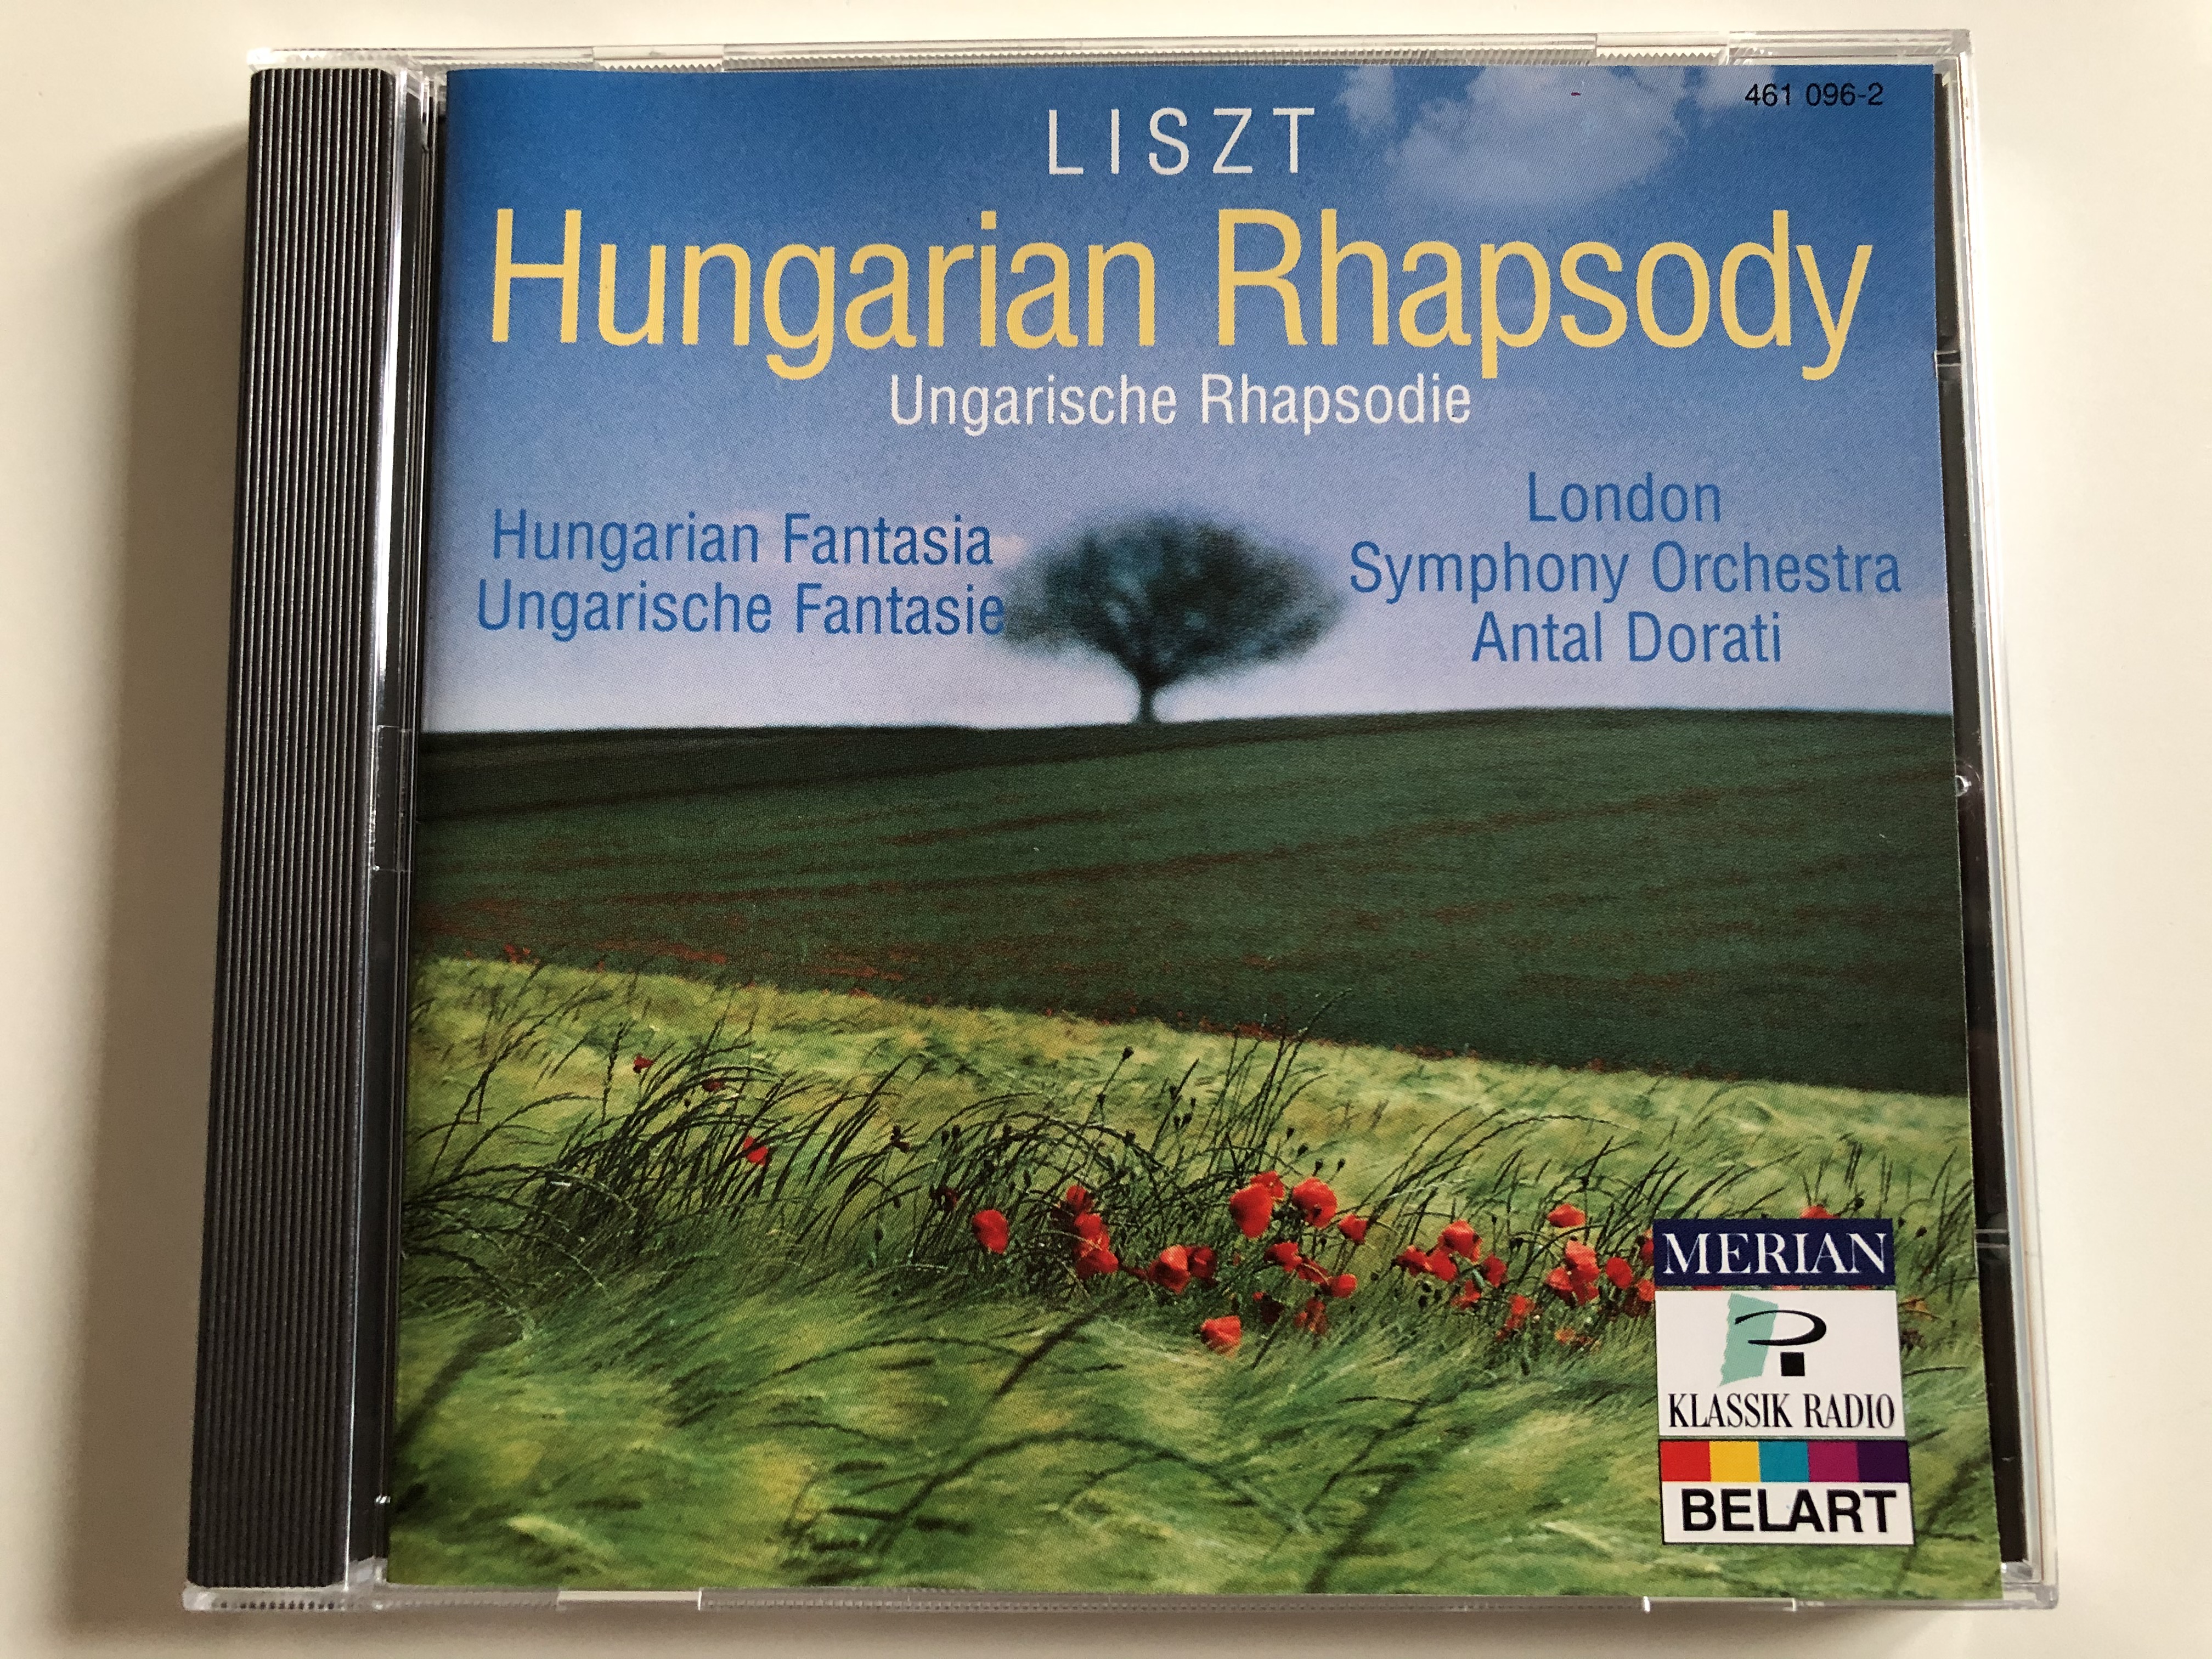 liszt-hungarian-rhapsody-hungarian-fantasia-london-symphony-orchestra-philips-classics-production-audio-cd-stereo-461-096-2-1-.jpg